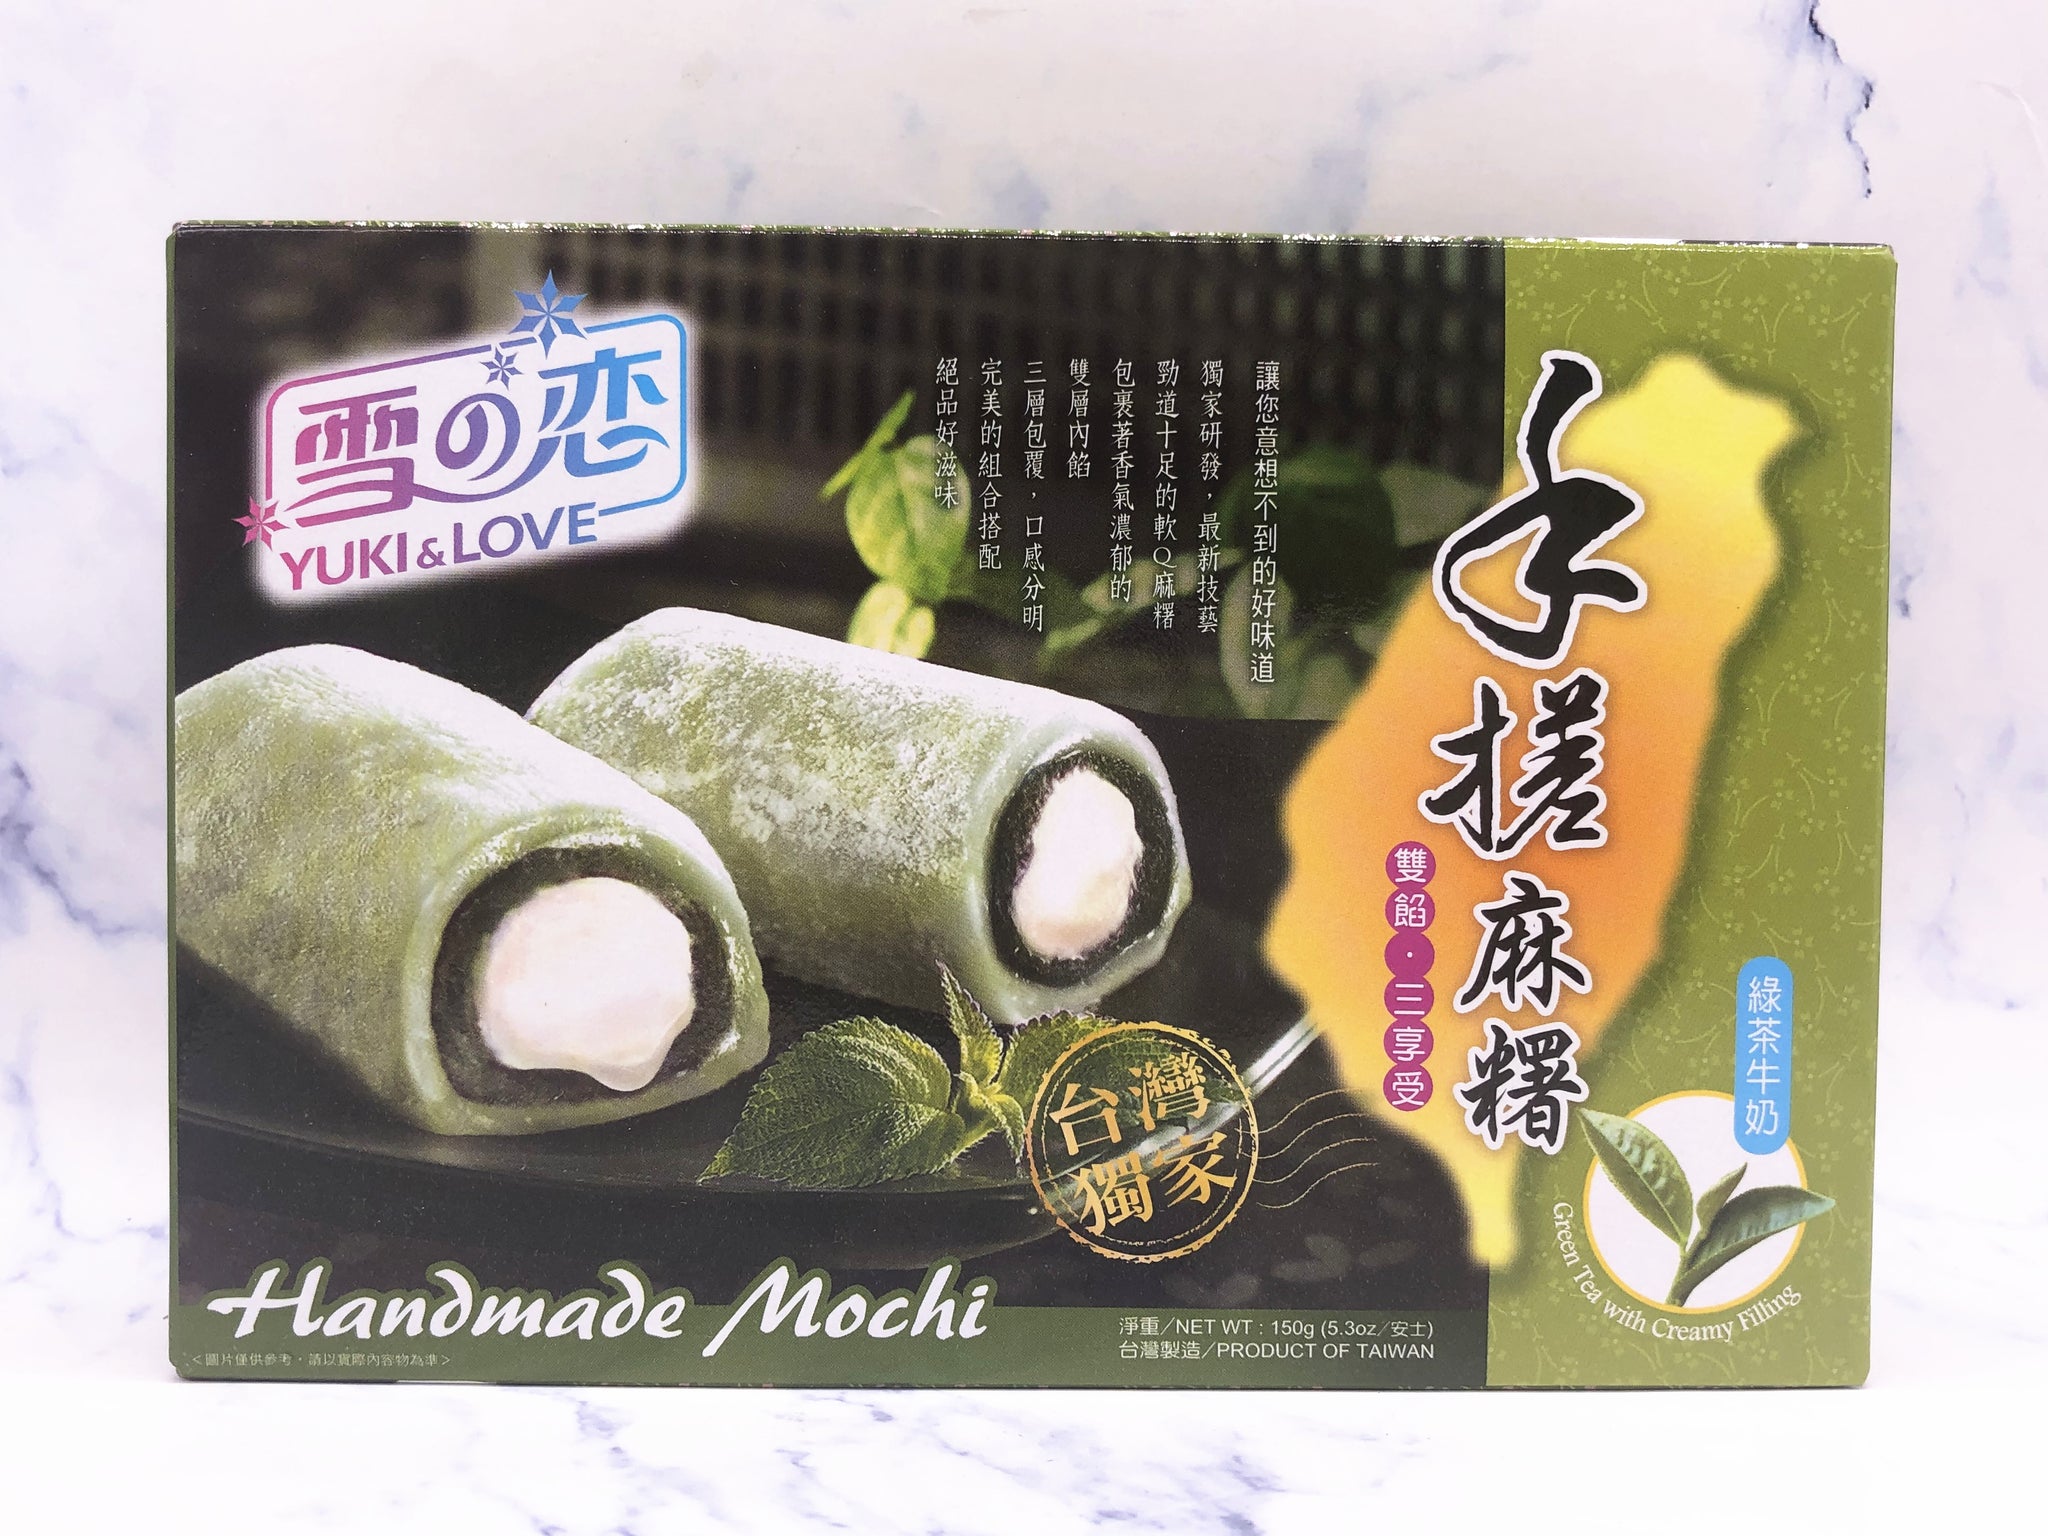 雪之恋双馅麻糬绿茶牛奶 SG Mochi(Milk with Green Tea Filling)